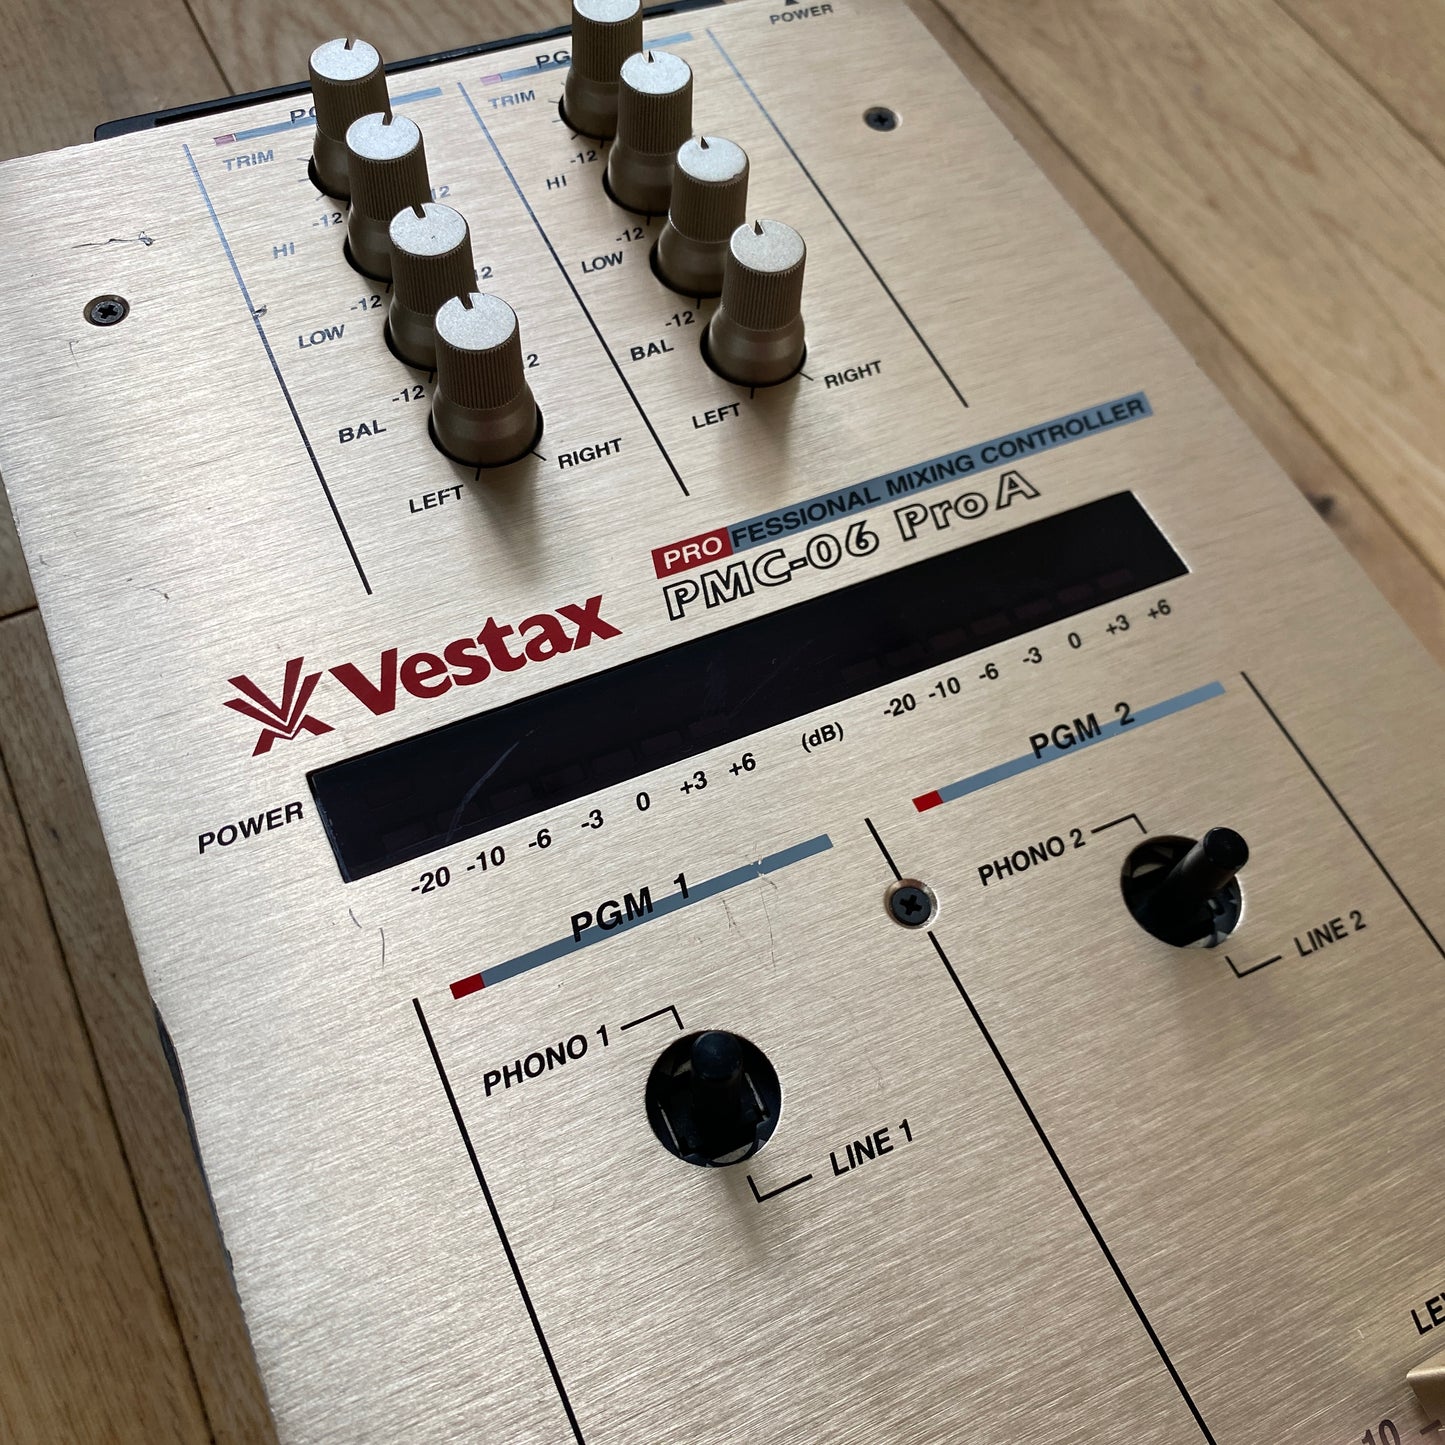 Vestax PMC-06 Pro A Serviced Mixer